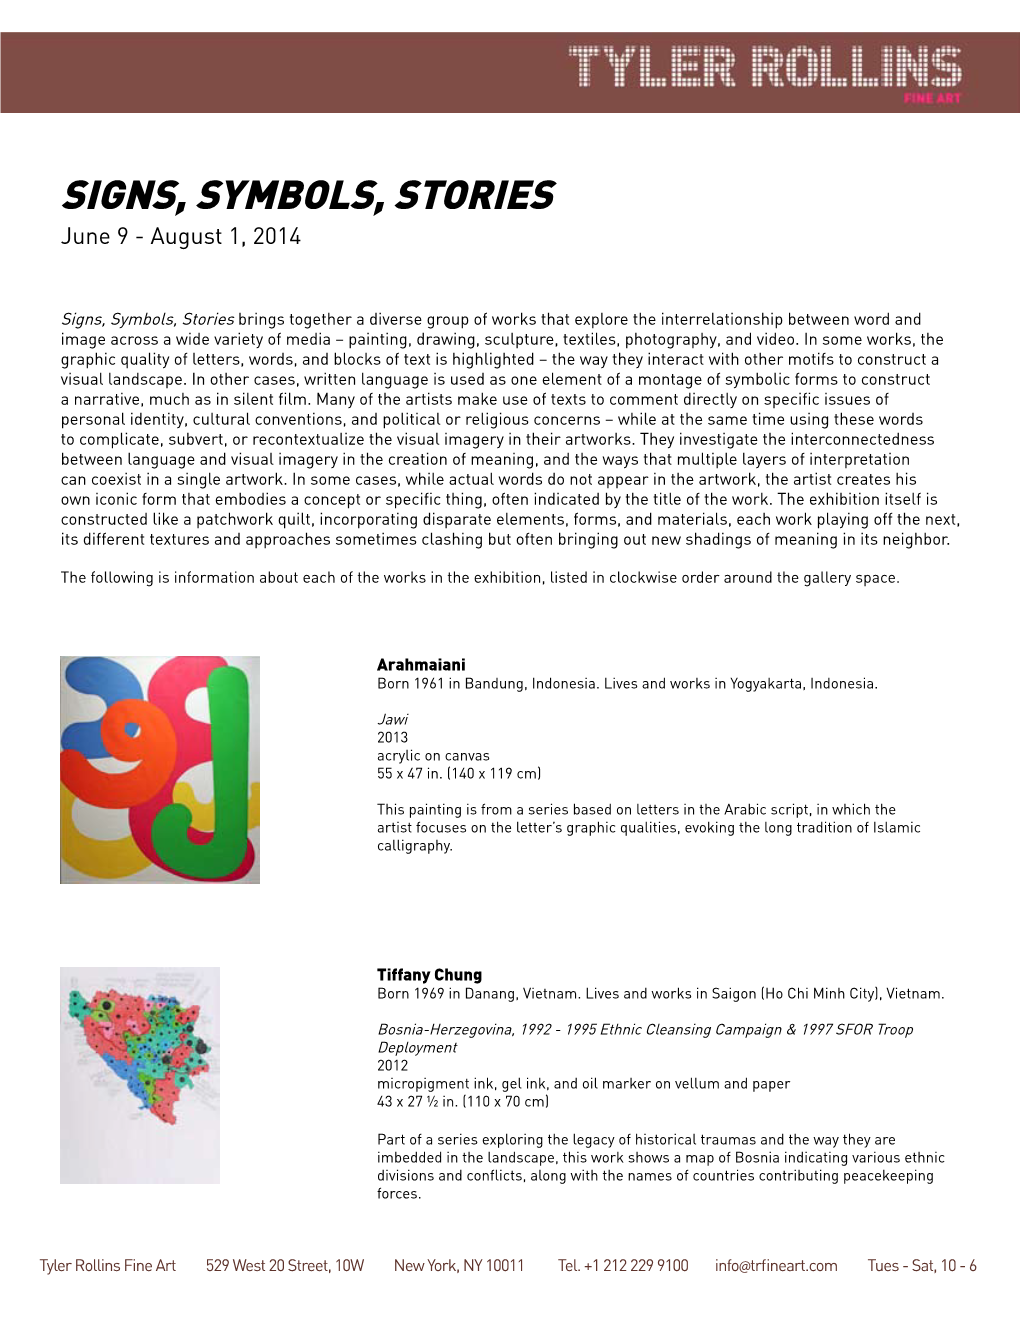 SIGNS, SYMBOLS, STORIES June 9 - August 1, 2014